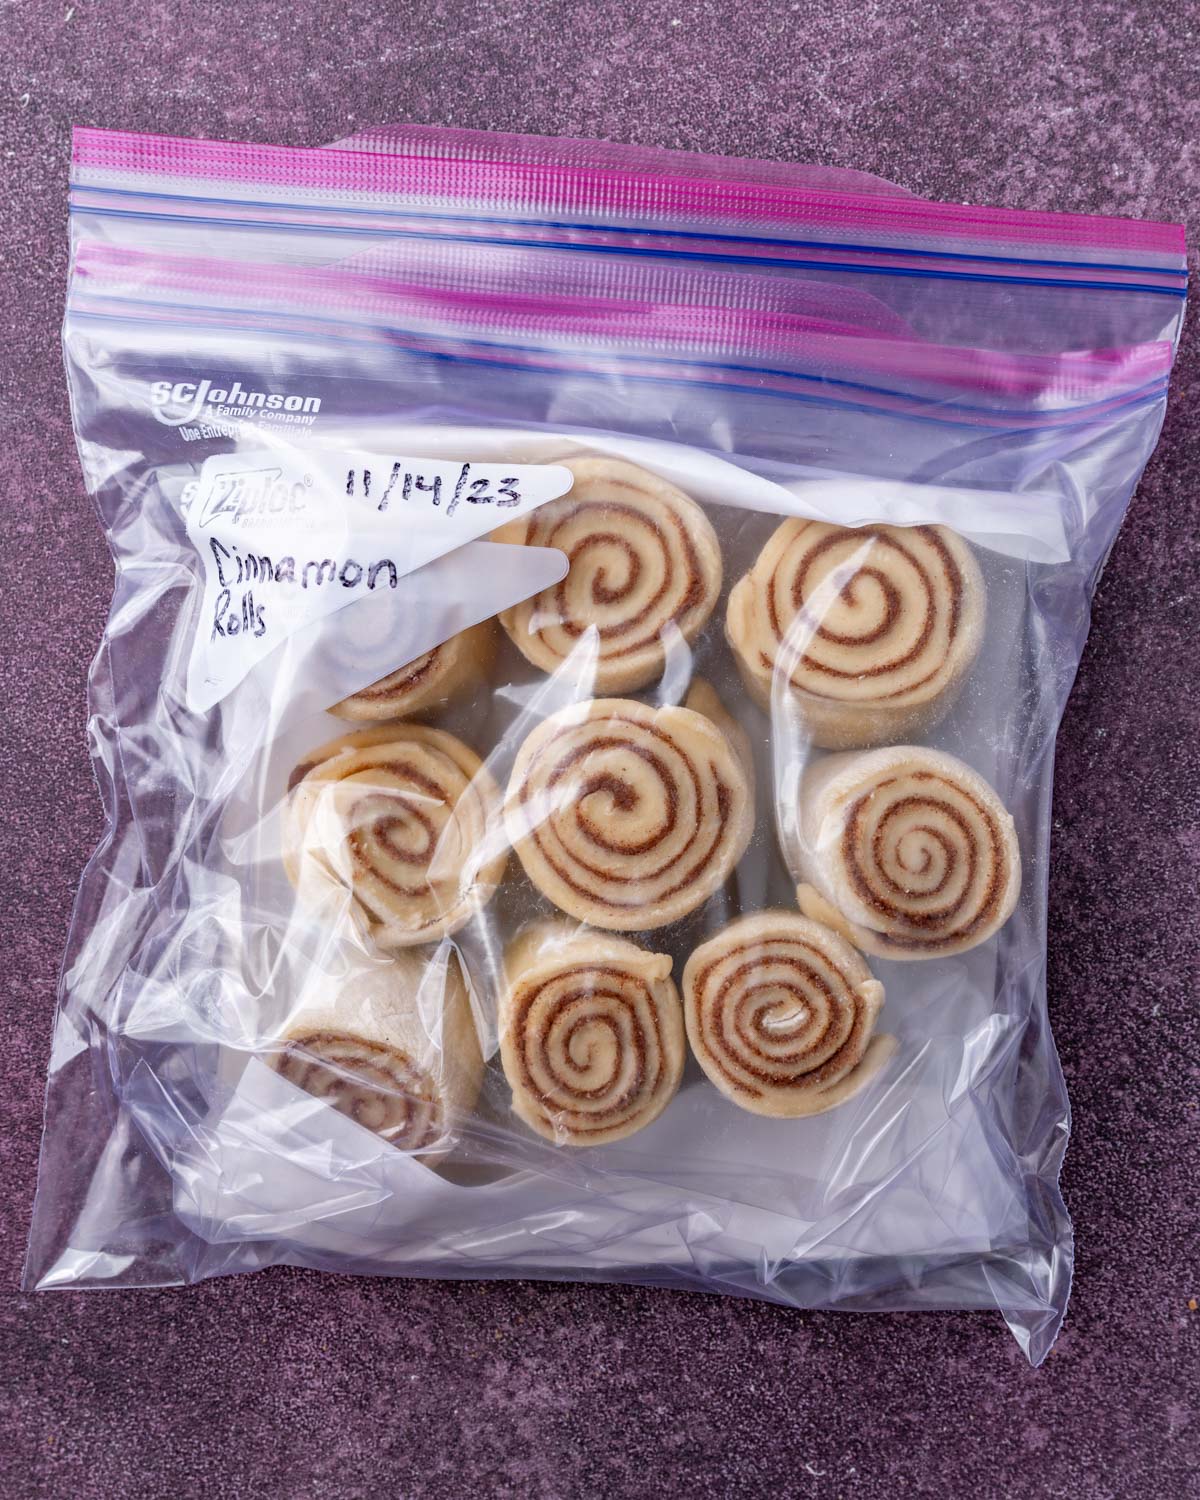 unbaked cinnamon rolls in plastic freezer bags